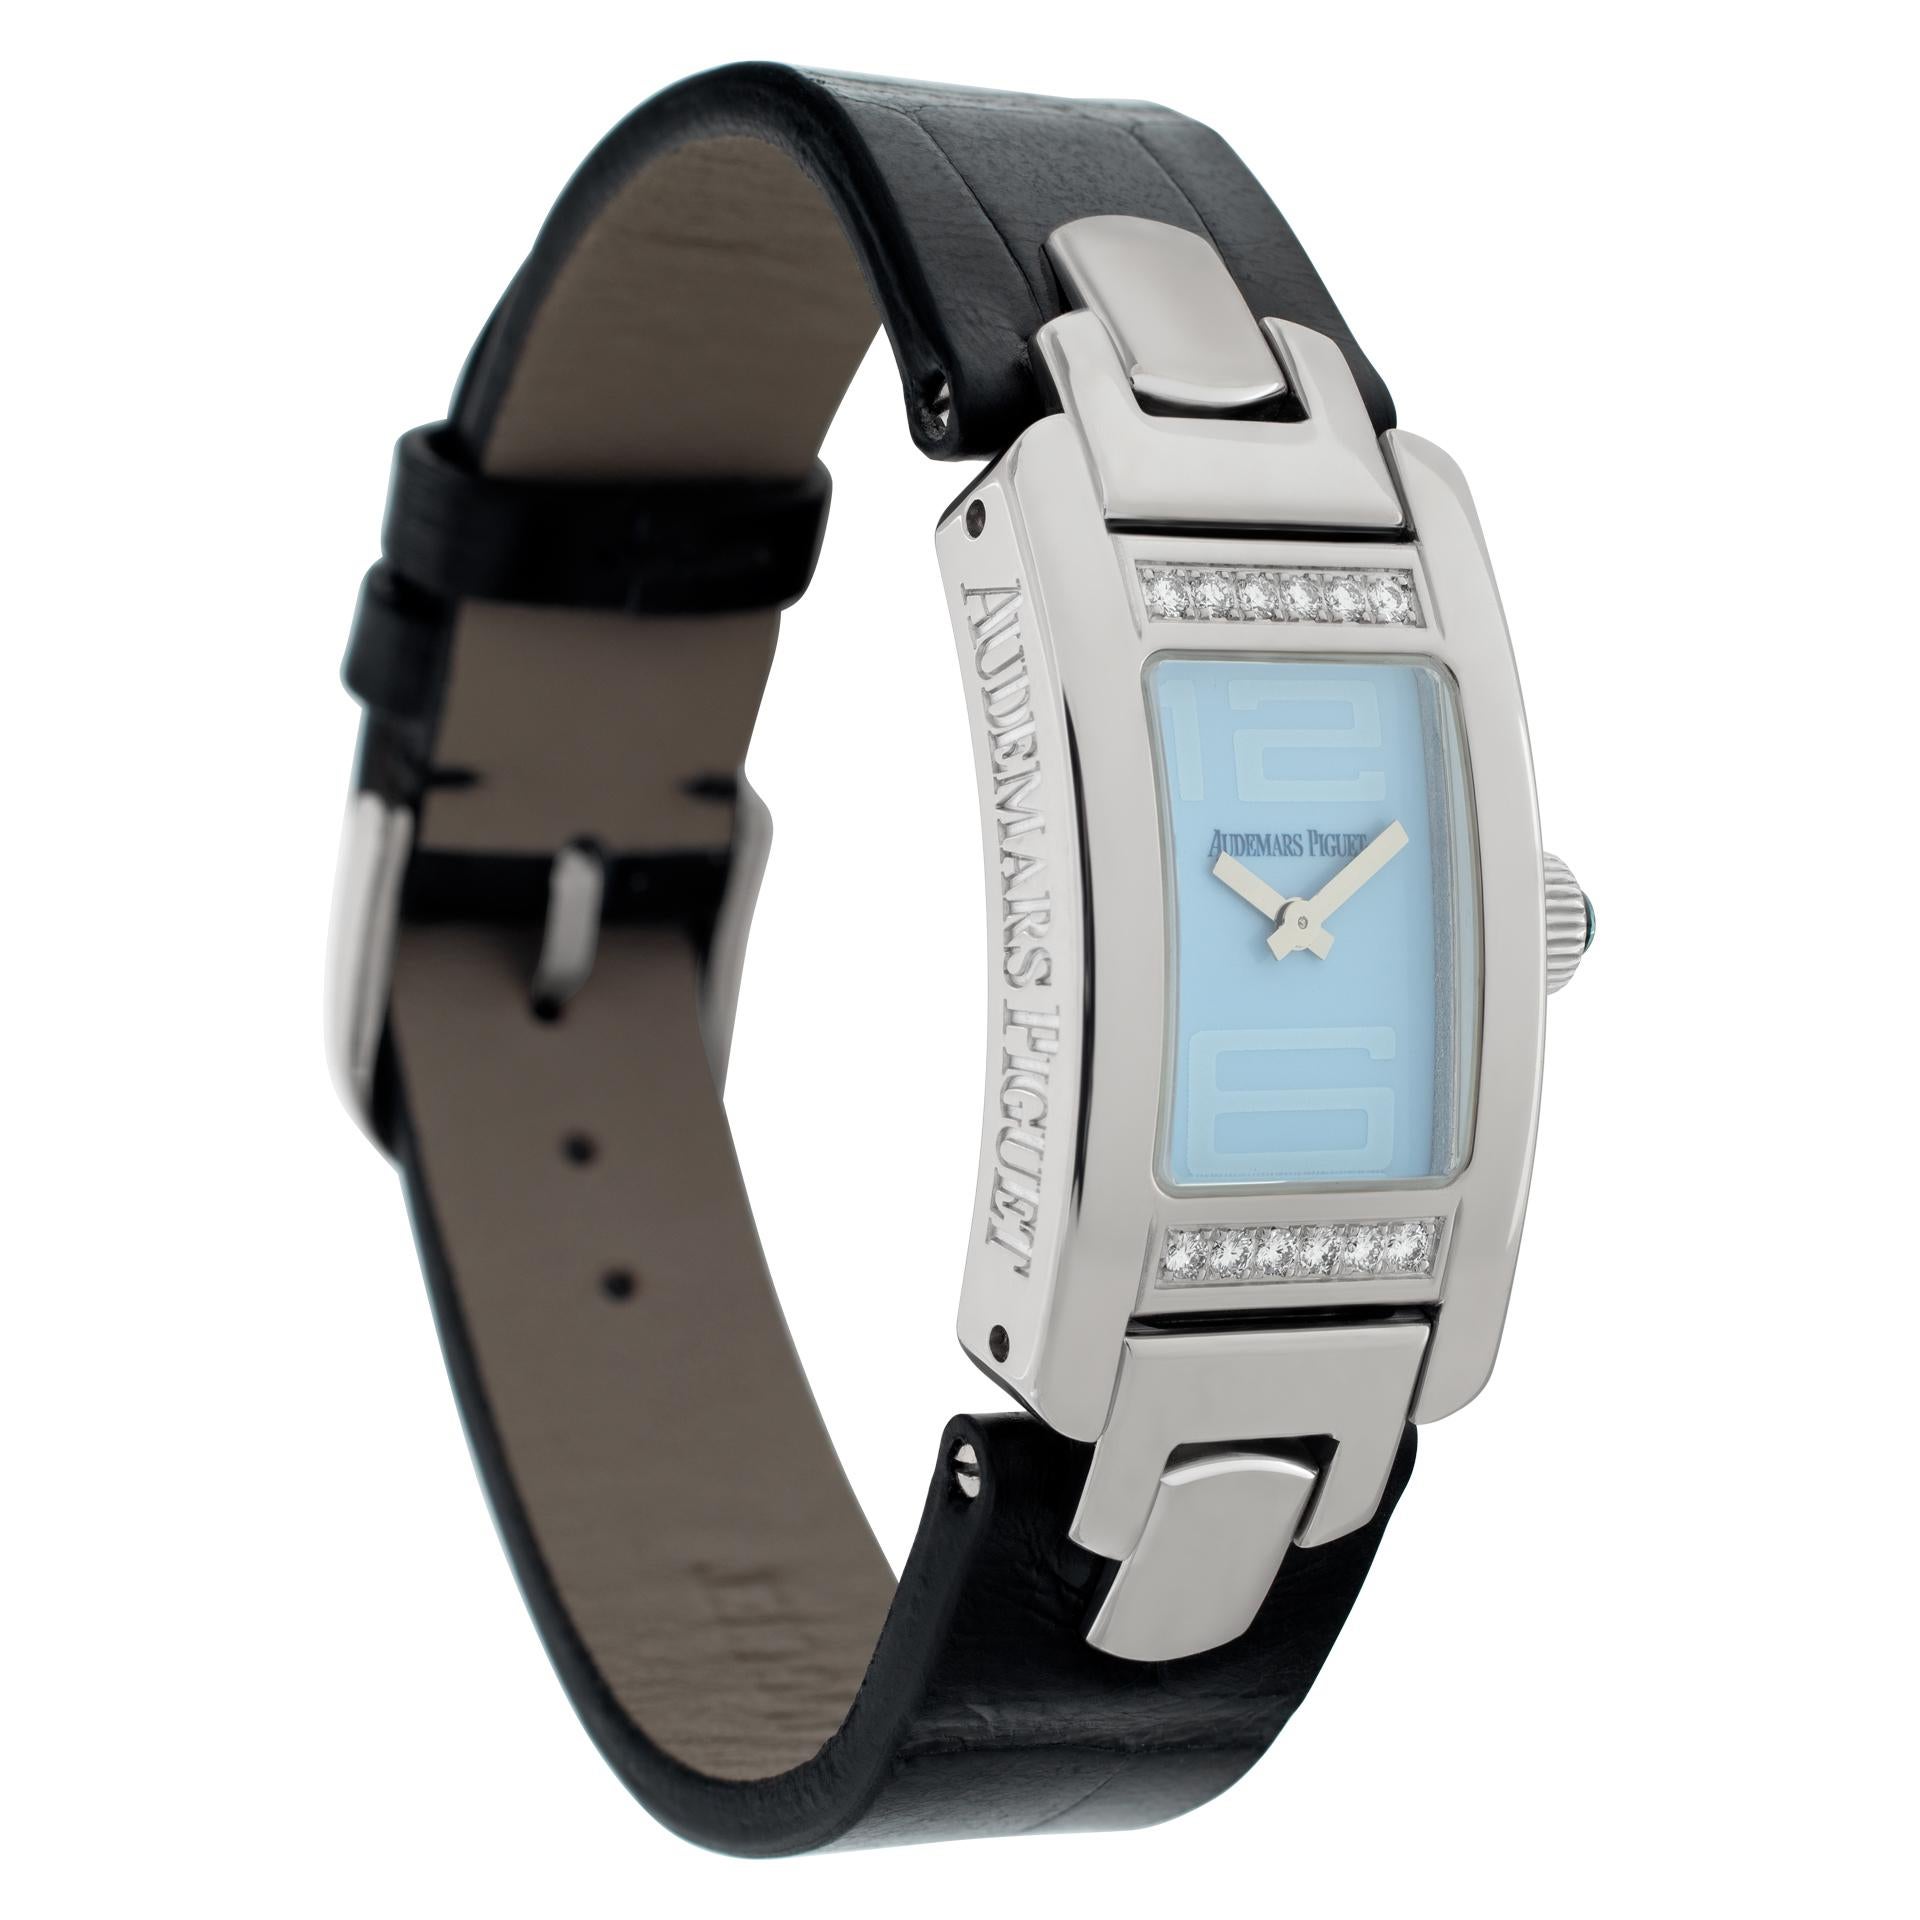 Audemars Piguet Promesse 18k white gold wristwatch Ref 67461bczza023lz01 In Excellent Condition For Sale In Surfside, FL